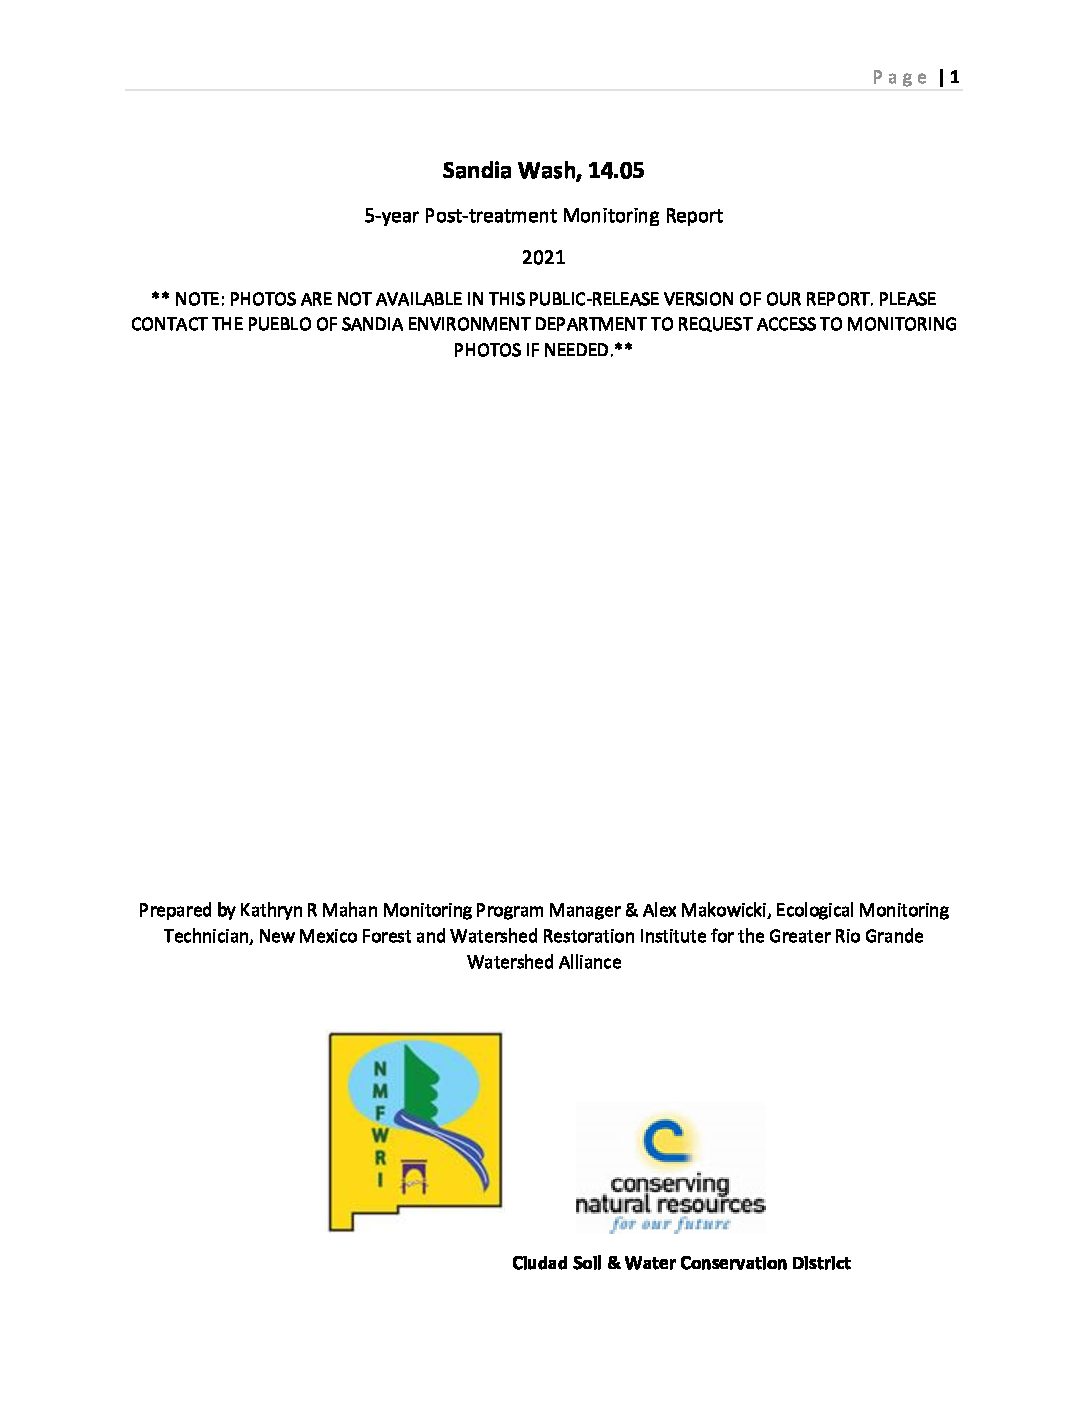 Sandia Wash 14.05 Post-treatment Monitoring Report 2021